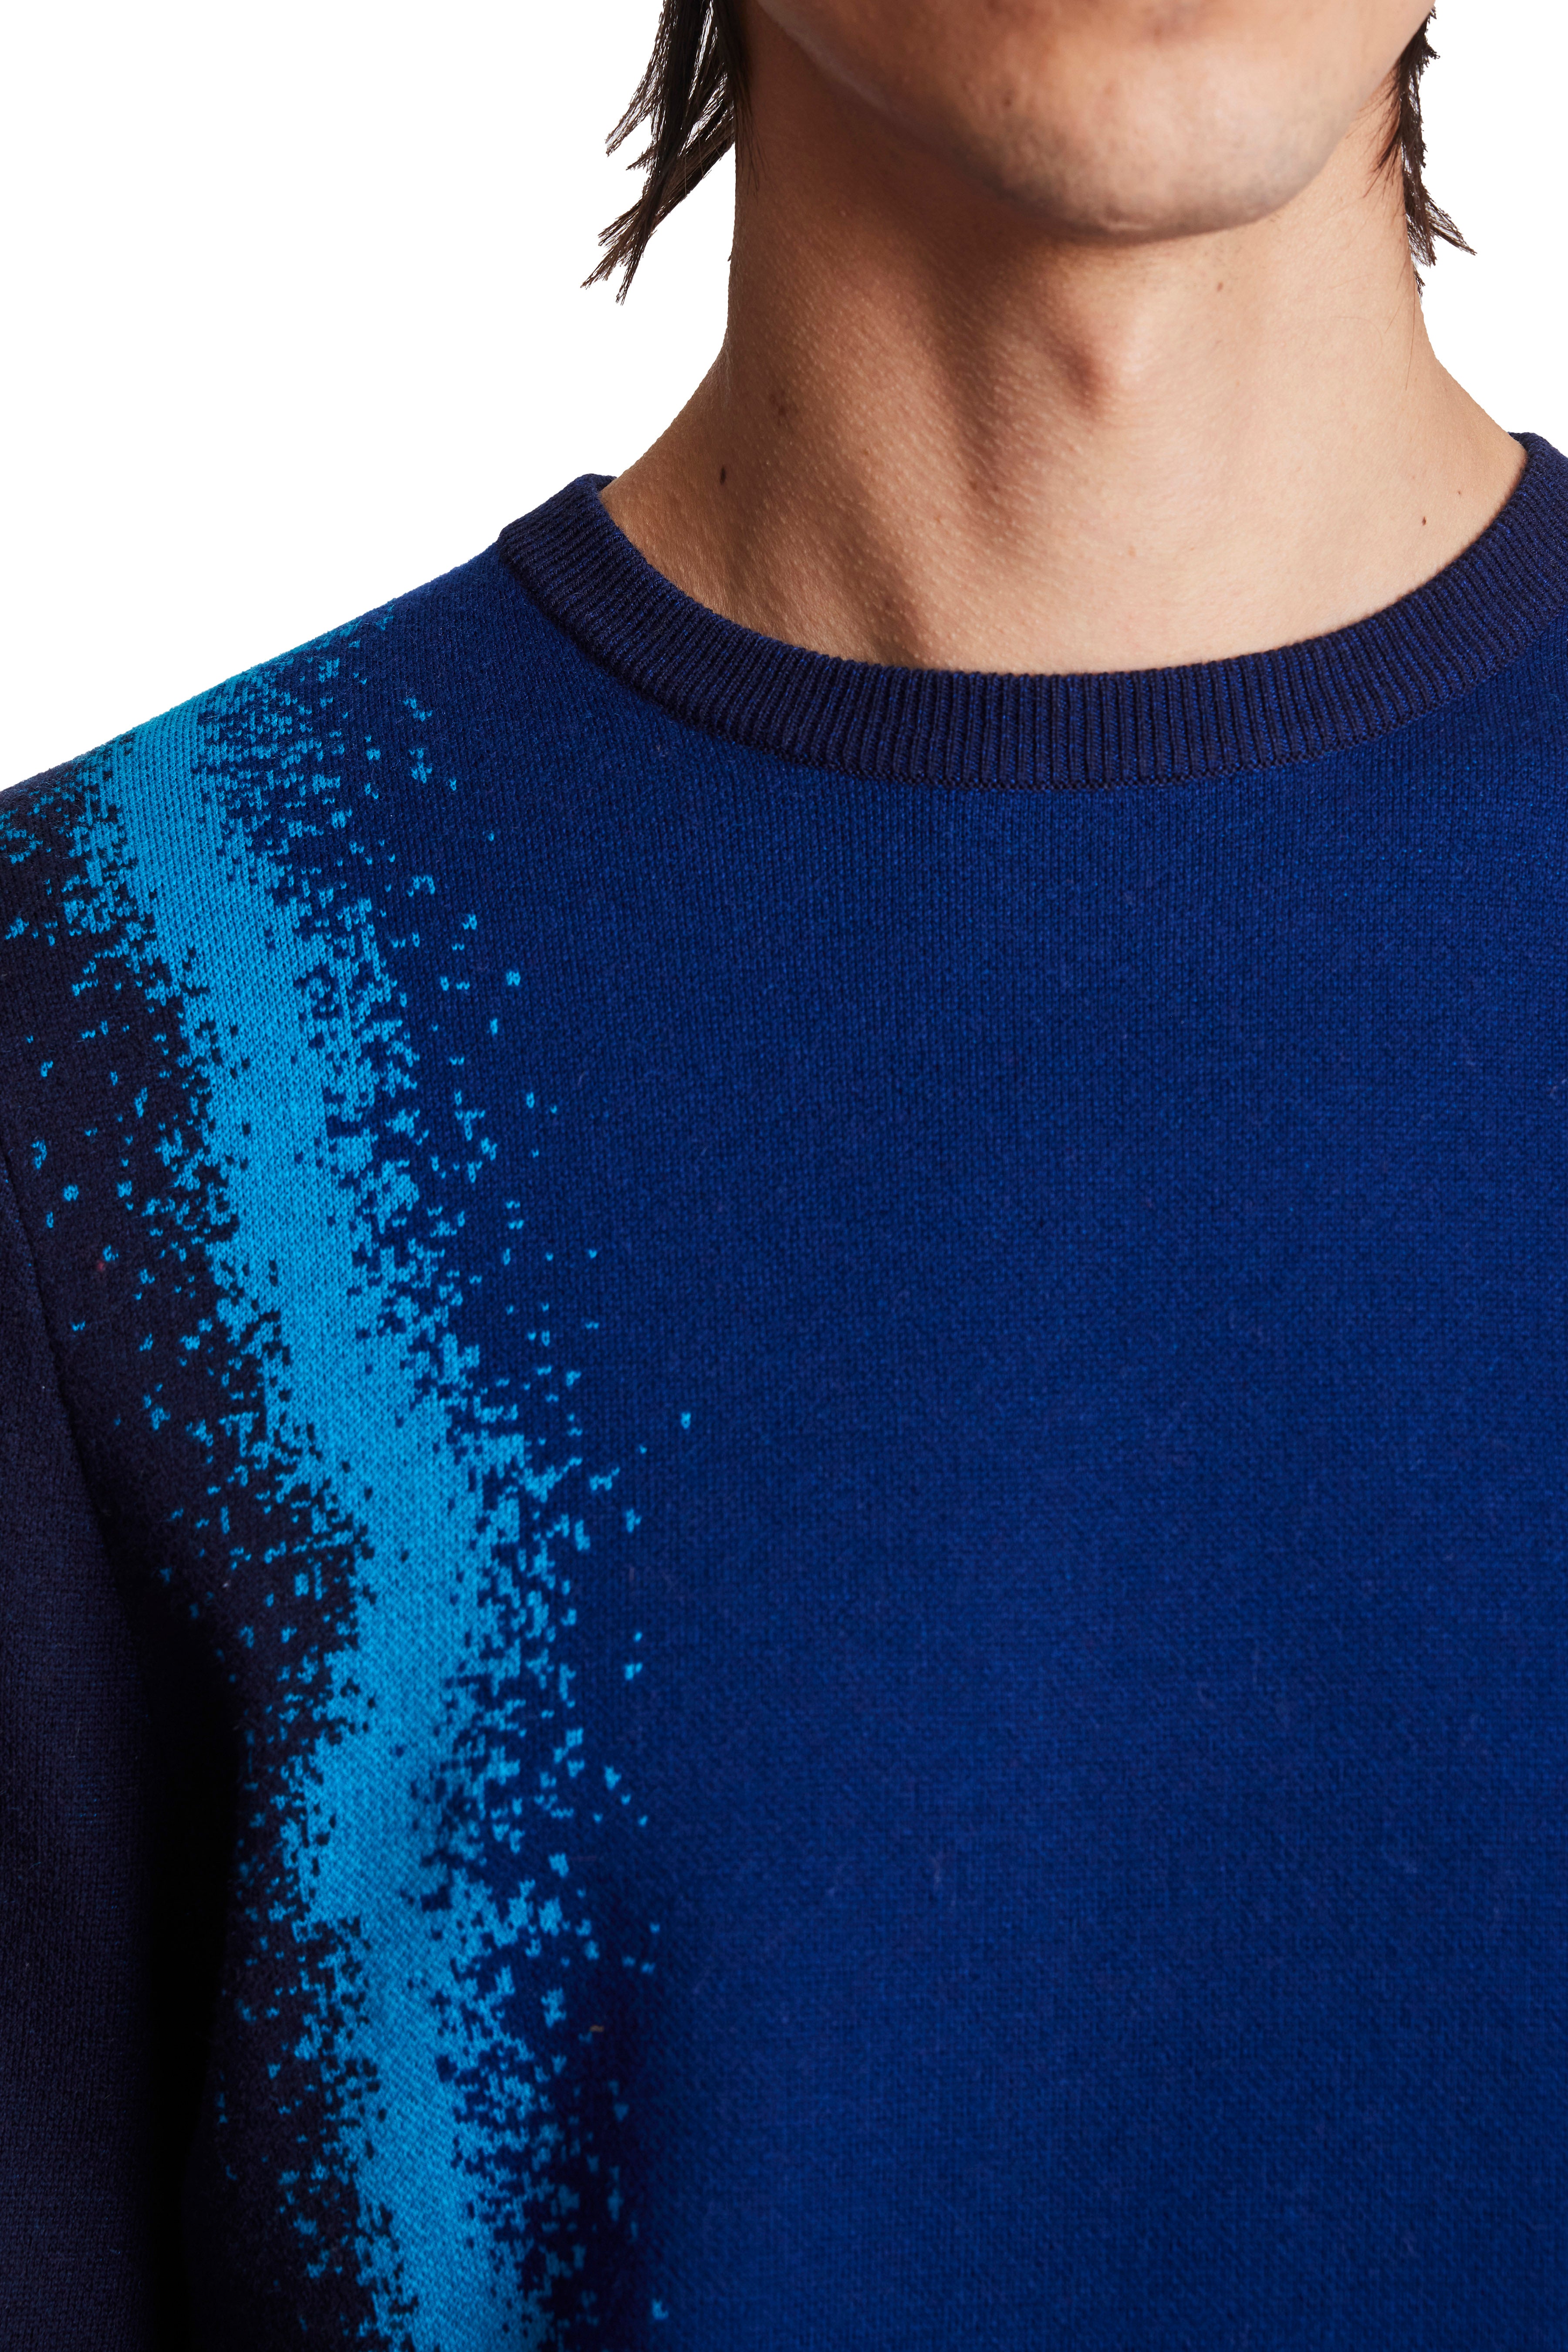 Lightening Crew Sweater - Blue Strike